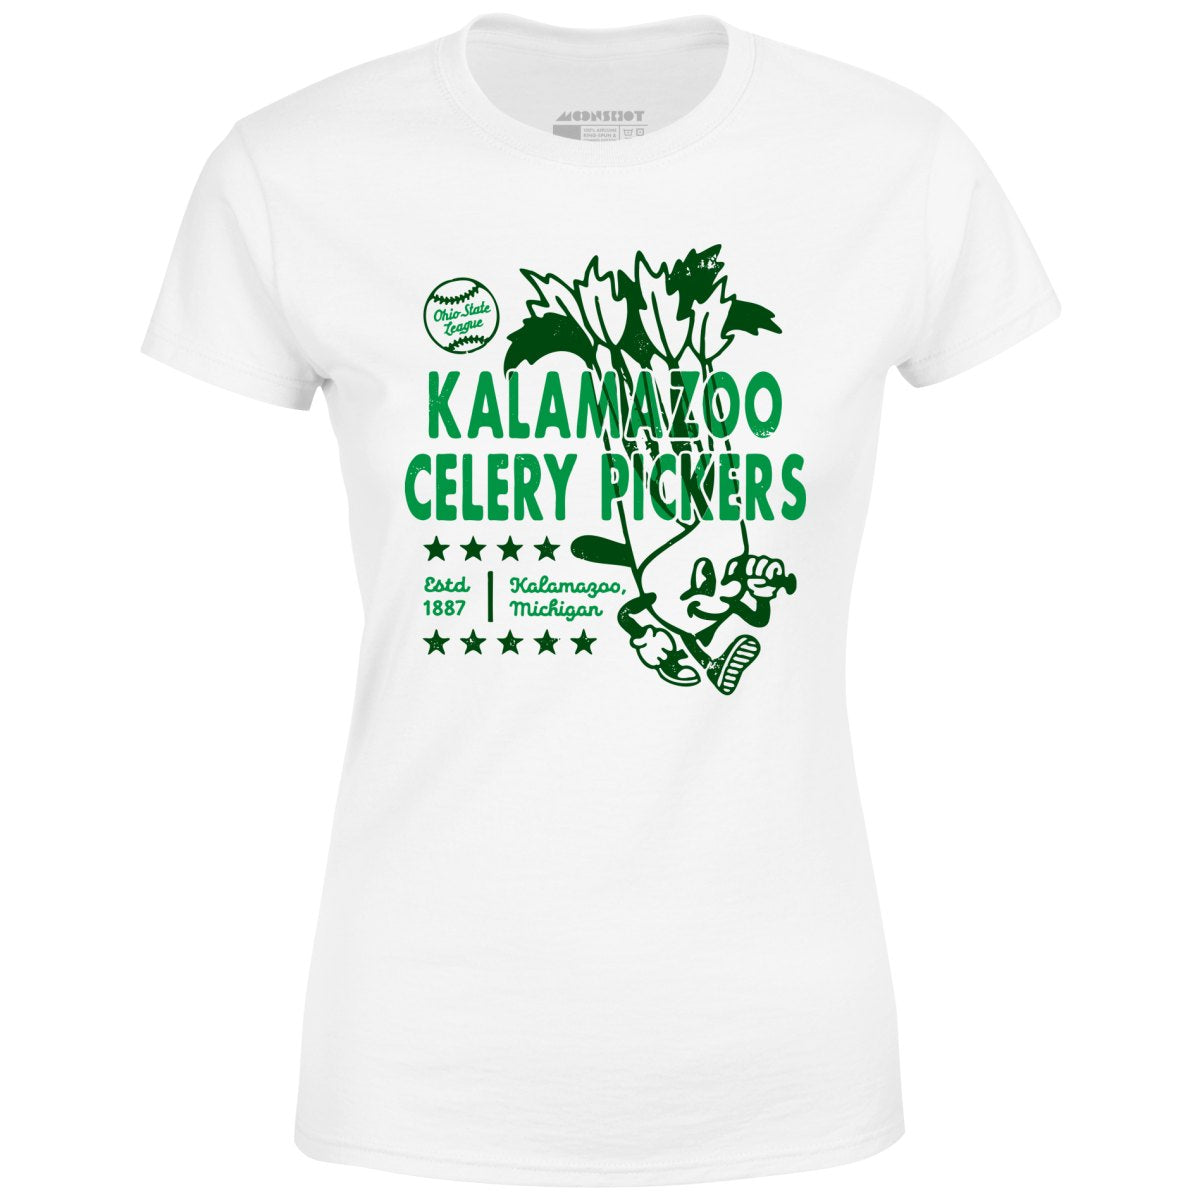 Kalamazoo Celery Pickers - Michigan - Vintage Defunct Baseball Teams - Women's T-Shirt